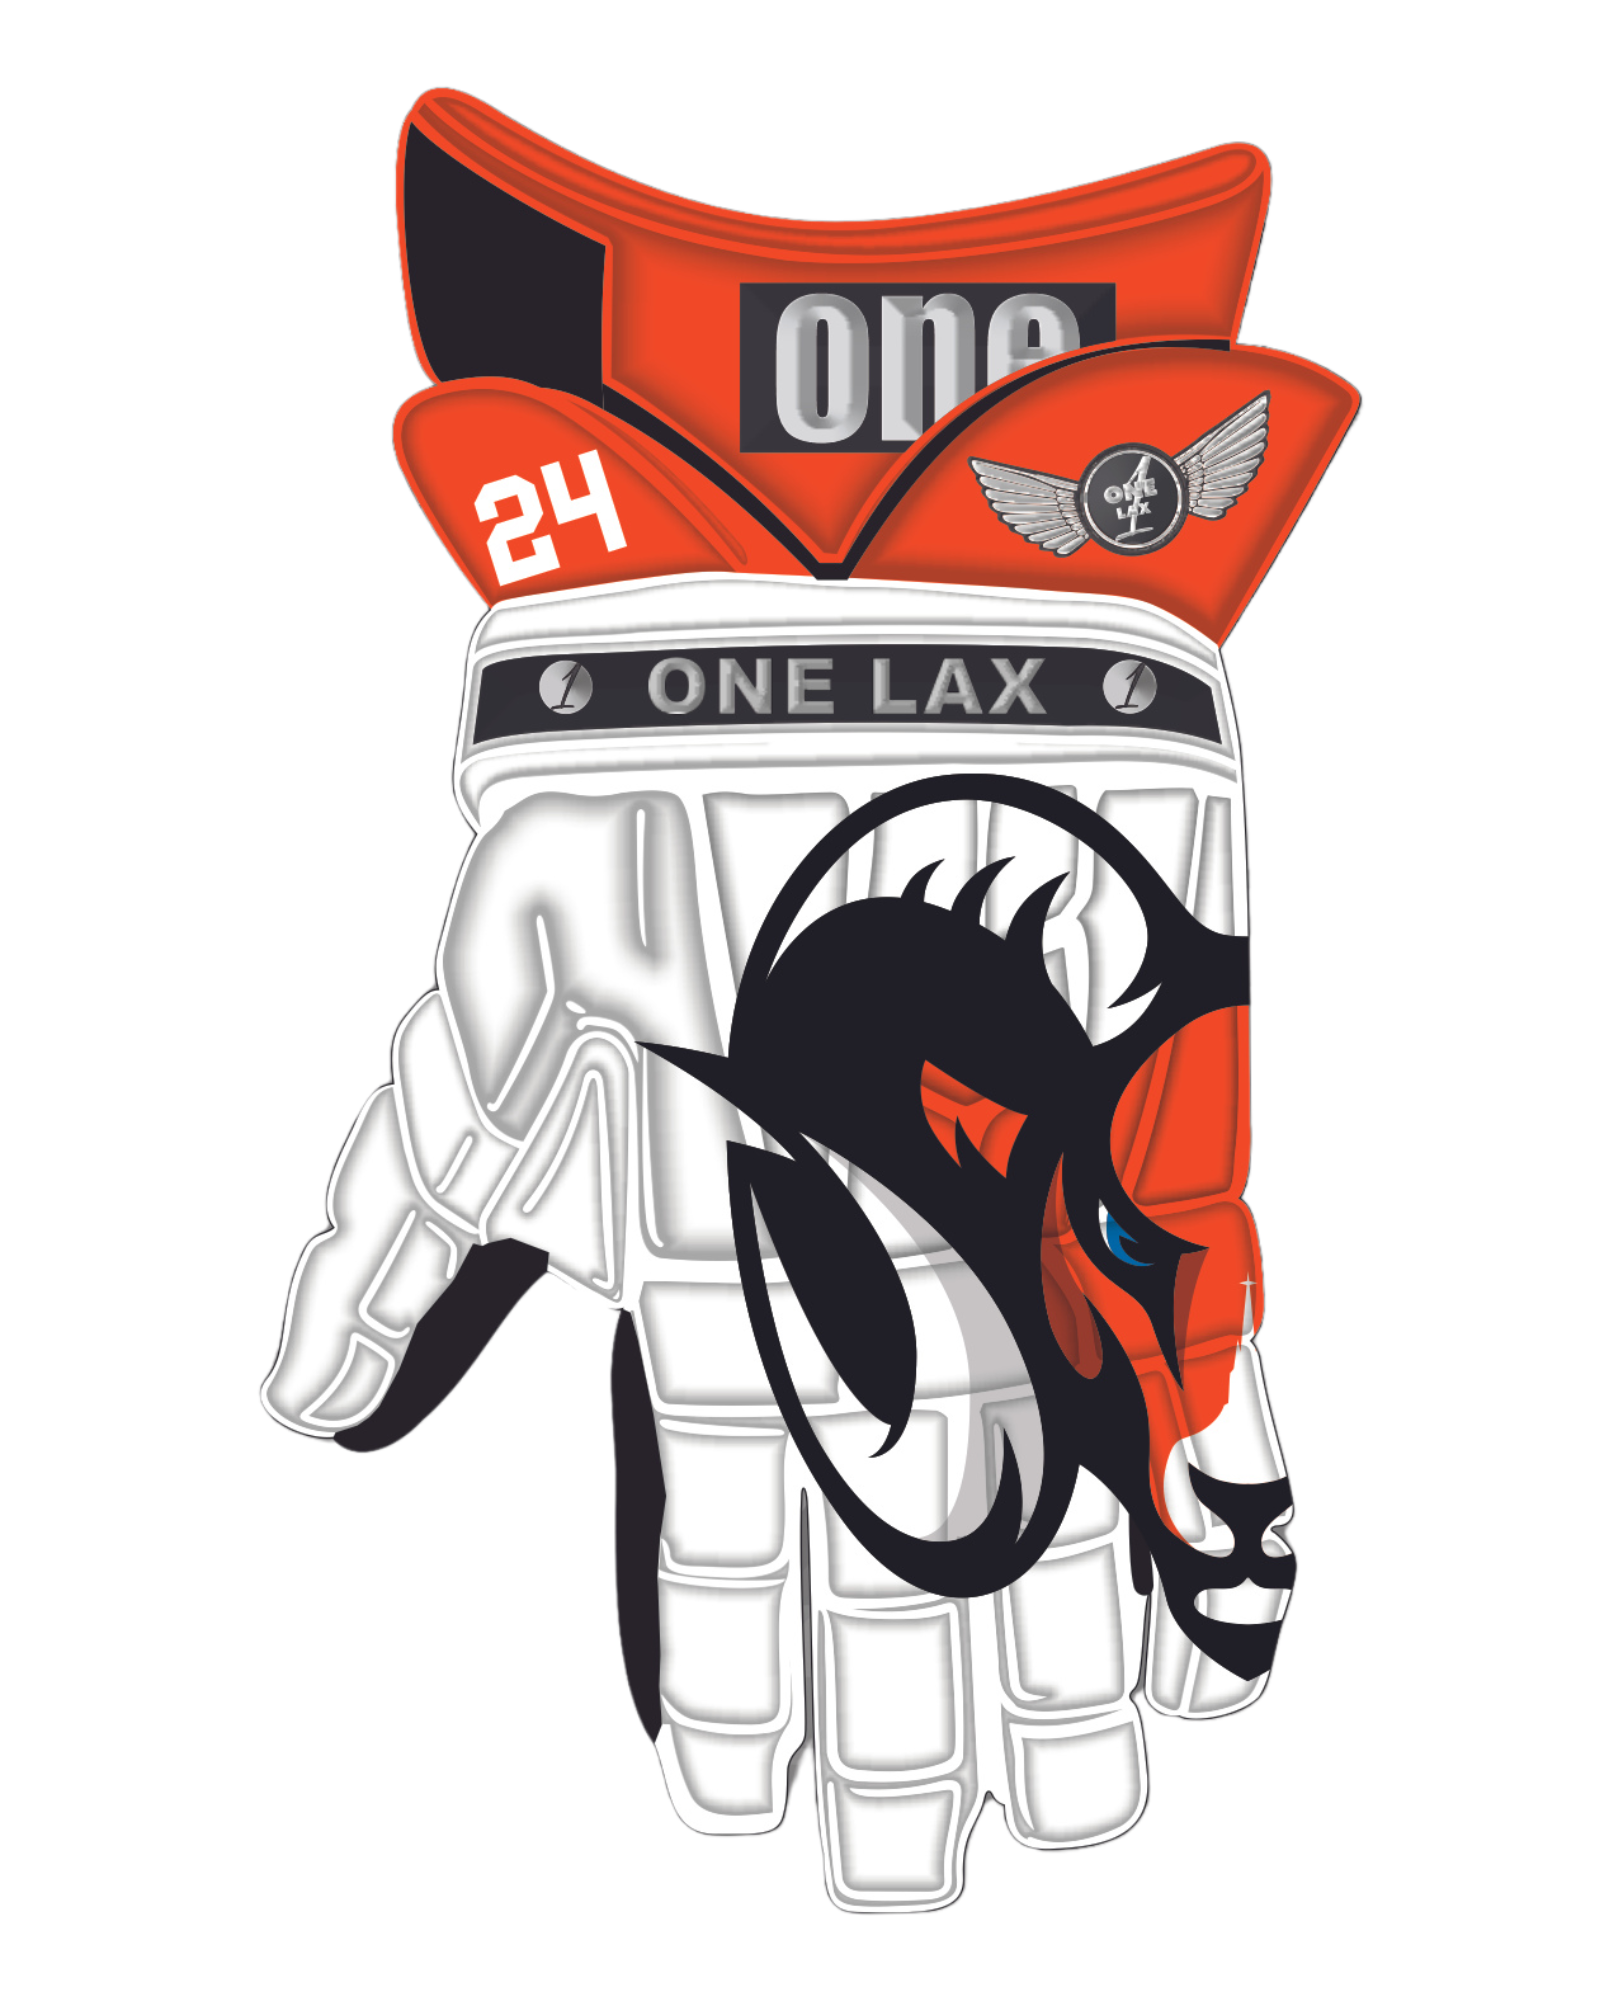 Cathedral Prep Ramblers Lacrosse Team | HYBRID Box & Field Lacrosse Gloves - One Lax